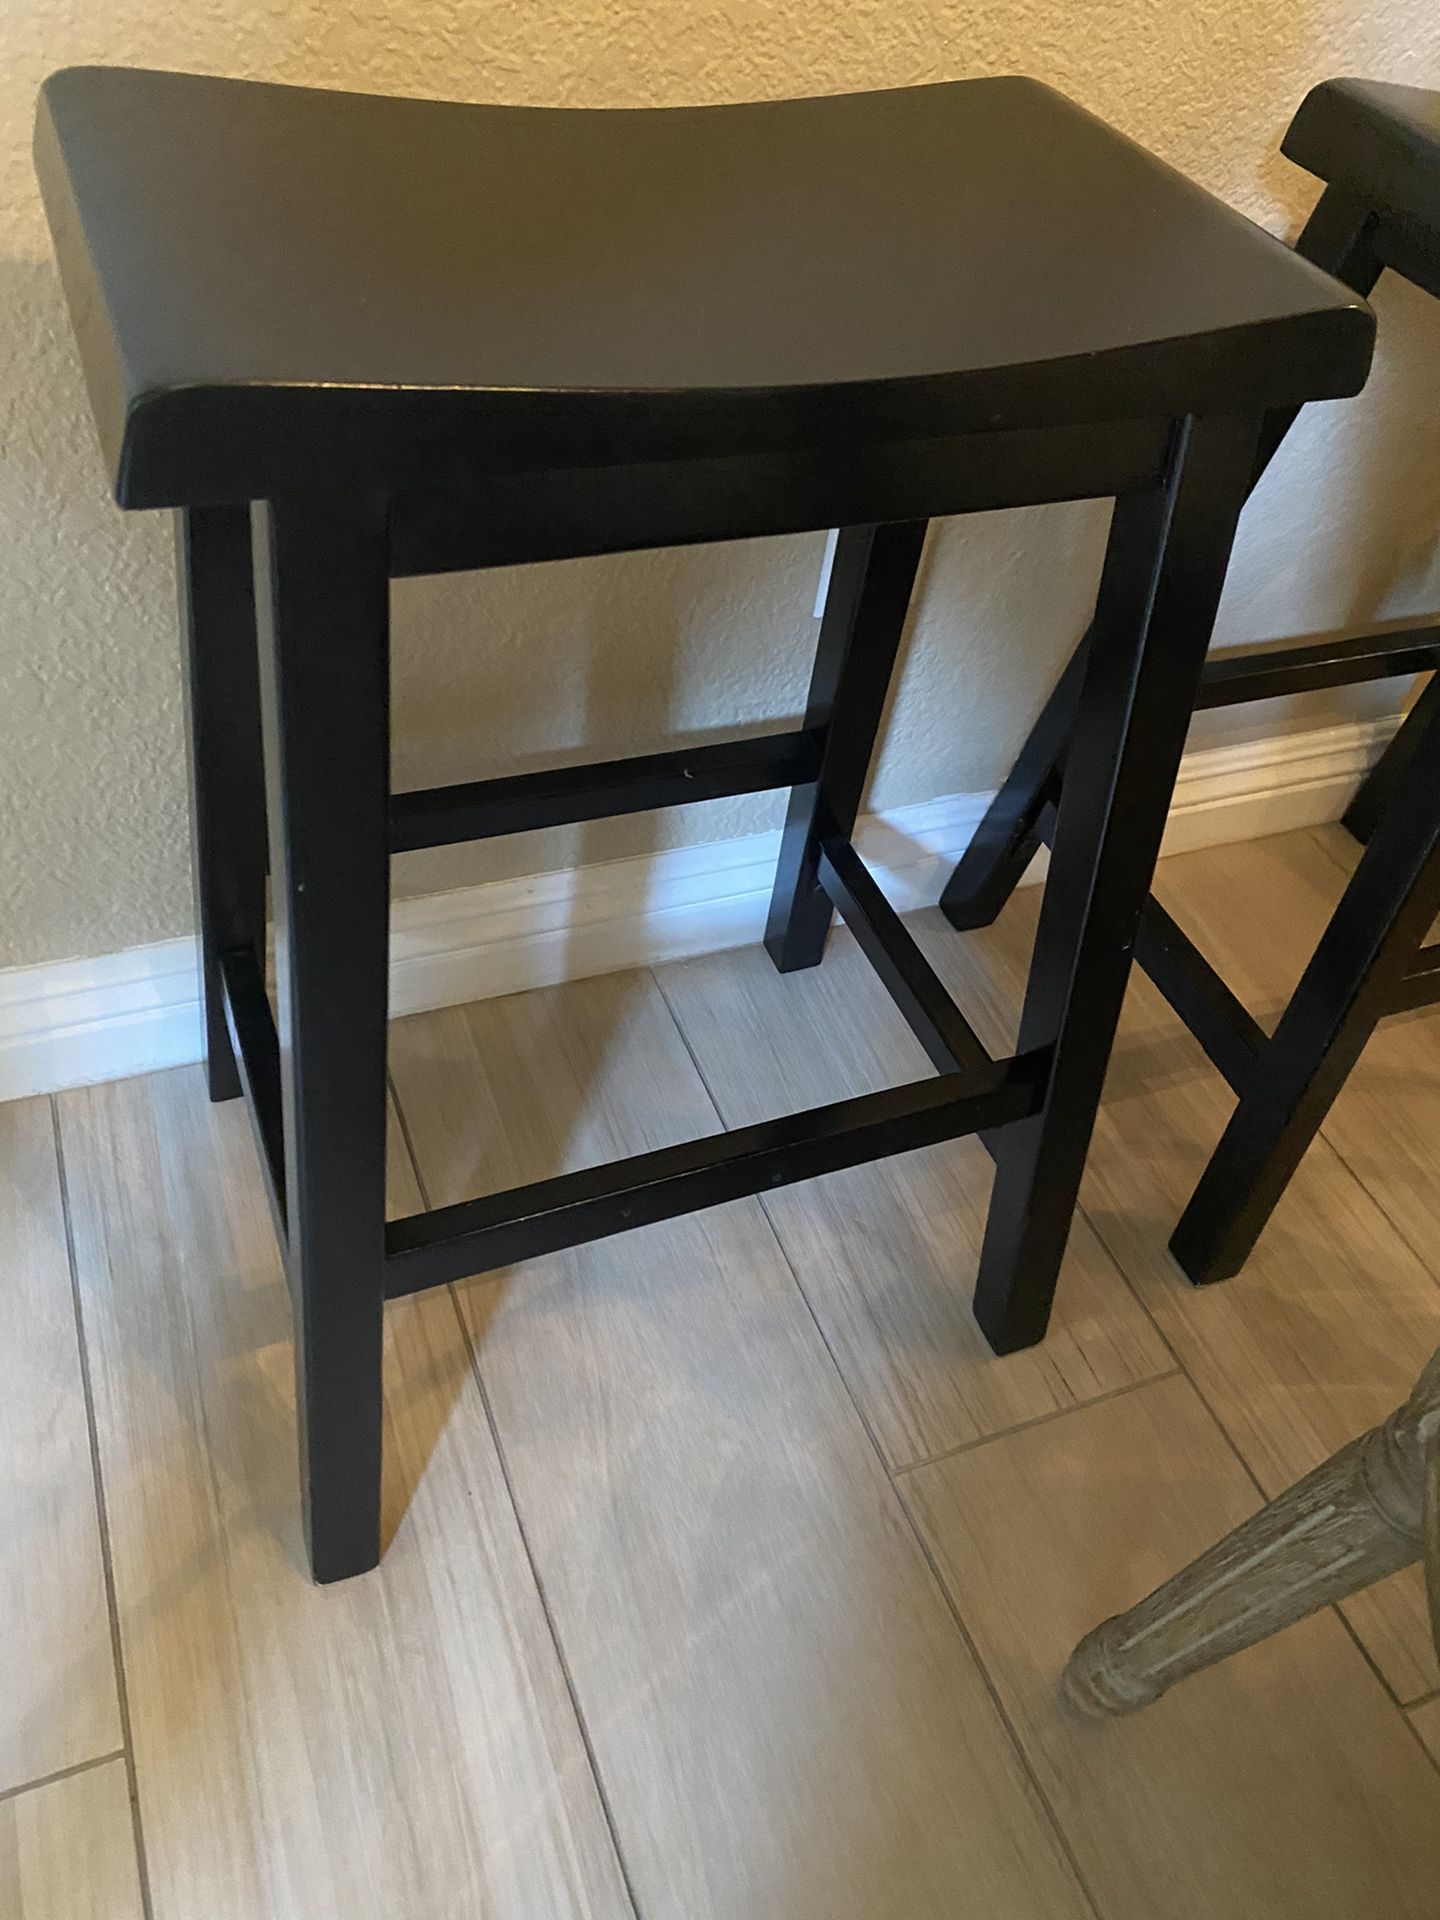 2 wood Counter stools